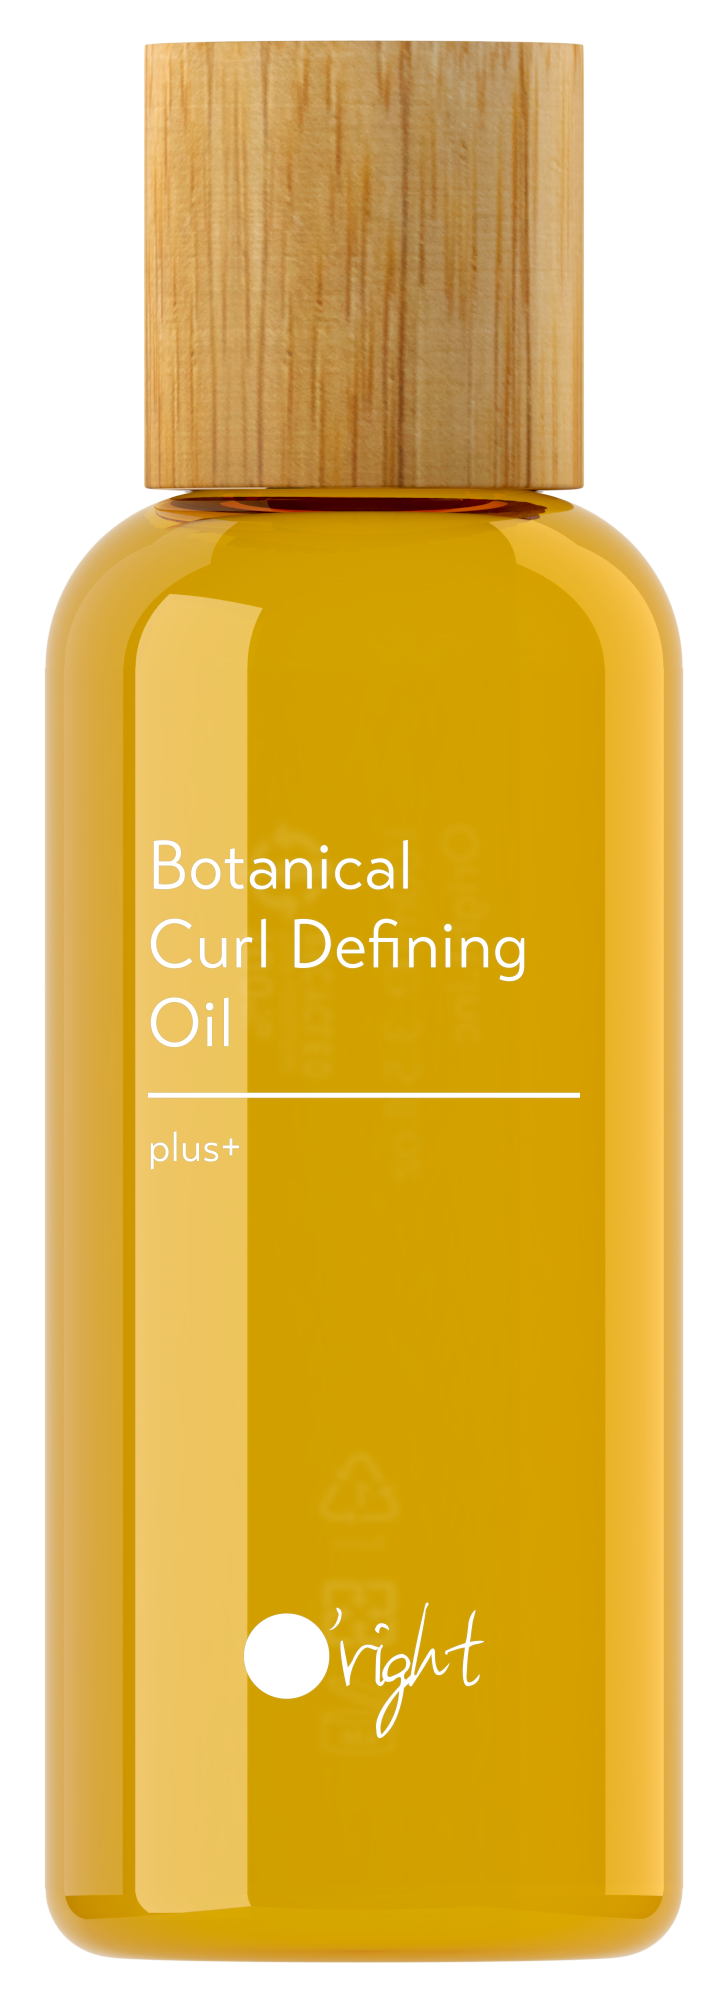 Botanical Curl Defining Oil 100mL